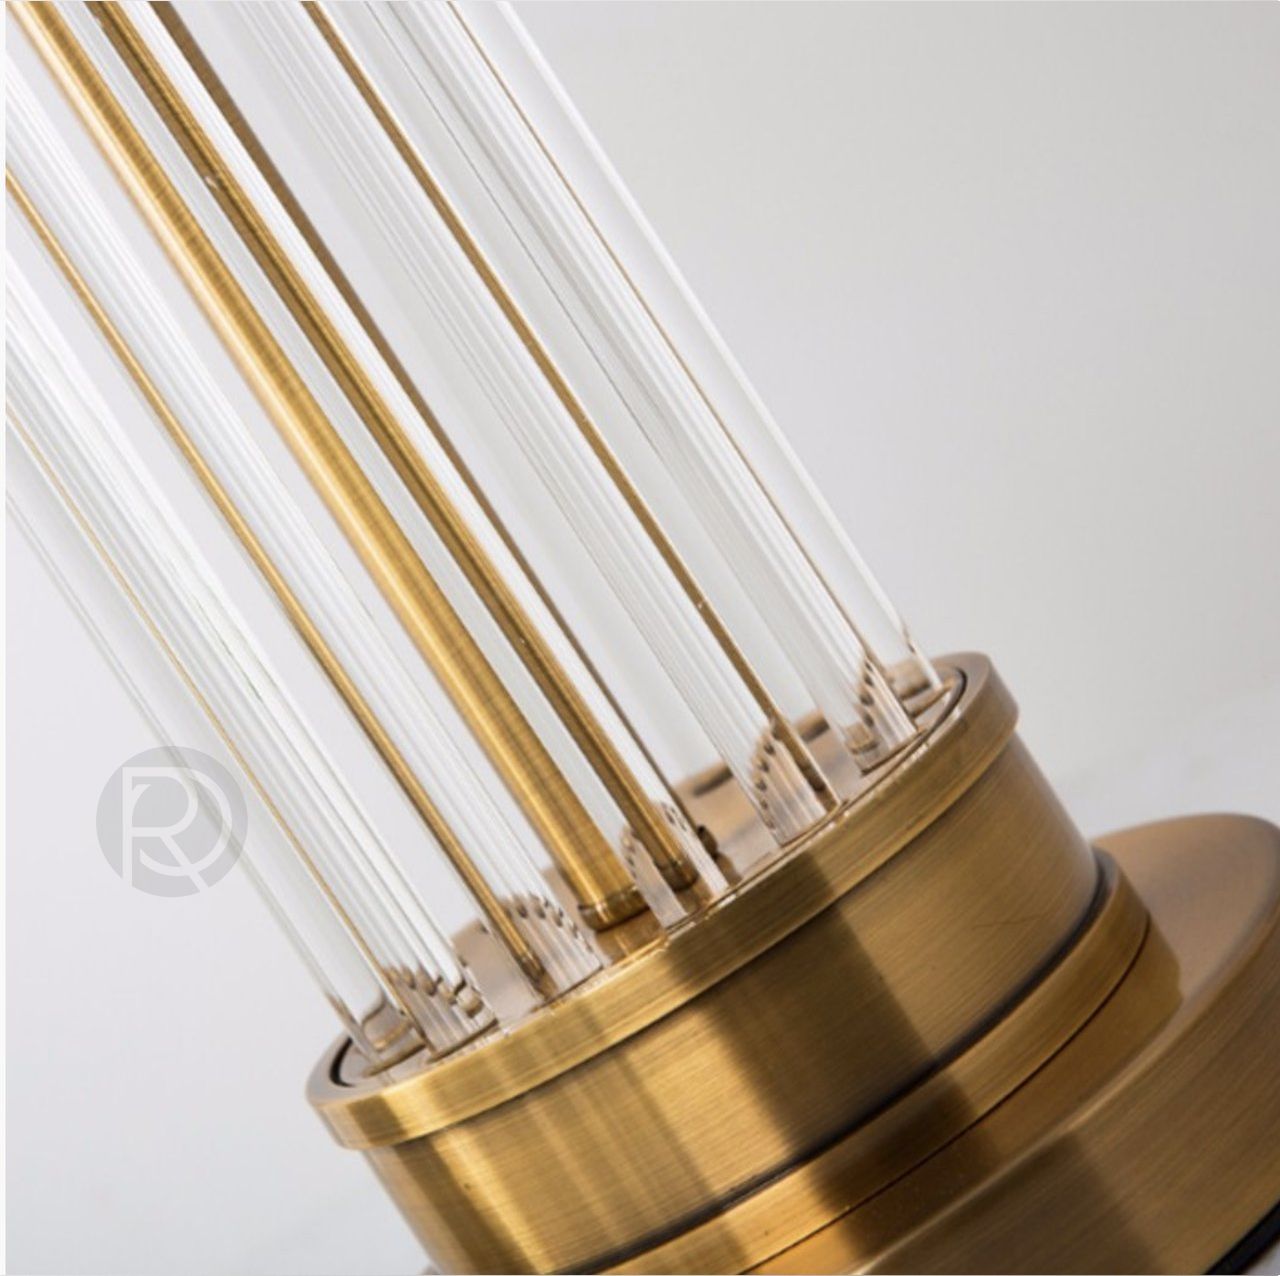 Designer table lamp CRYSTAL GLASS by Romatti